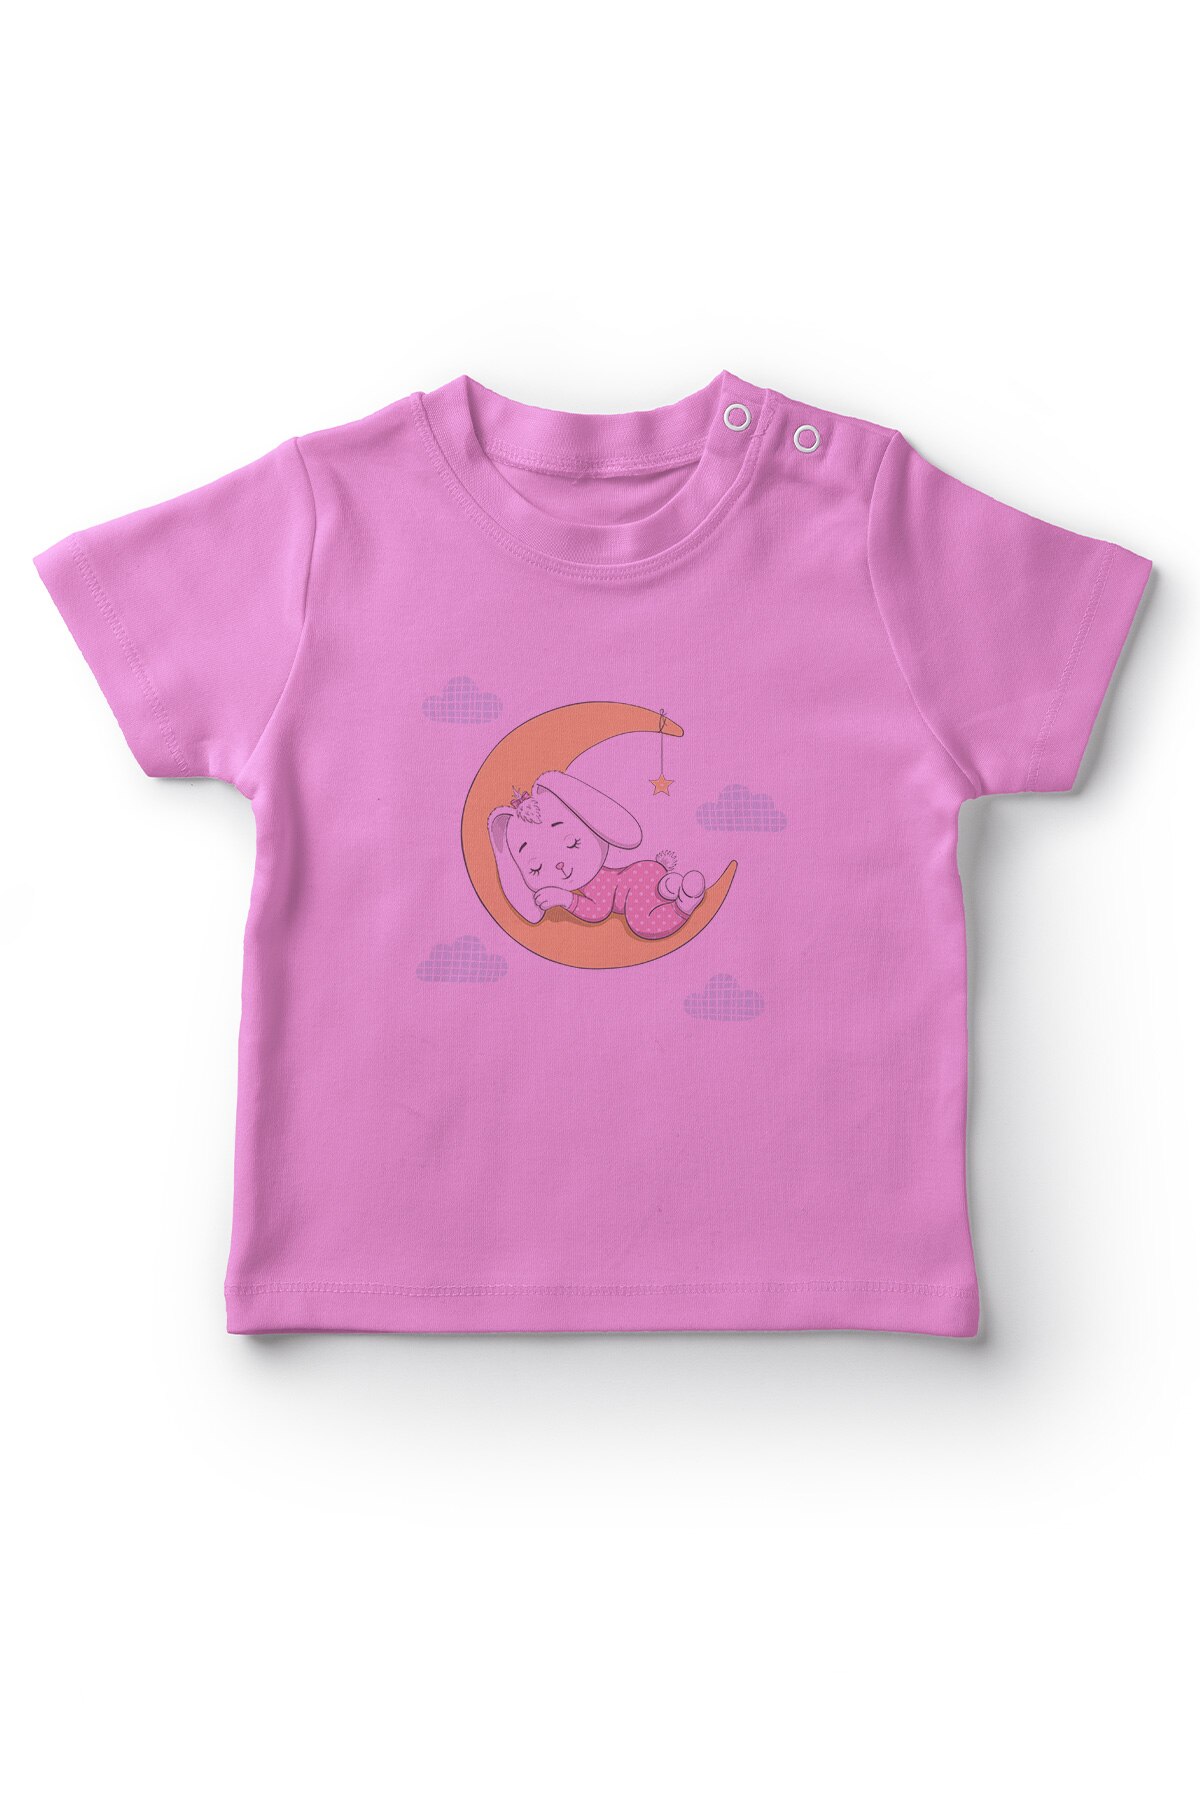 Angemie Baby Slapen Konijn Op De Maan Baby Meisje T-shirt Roze